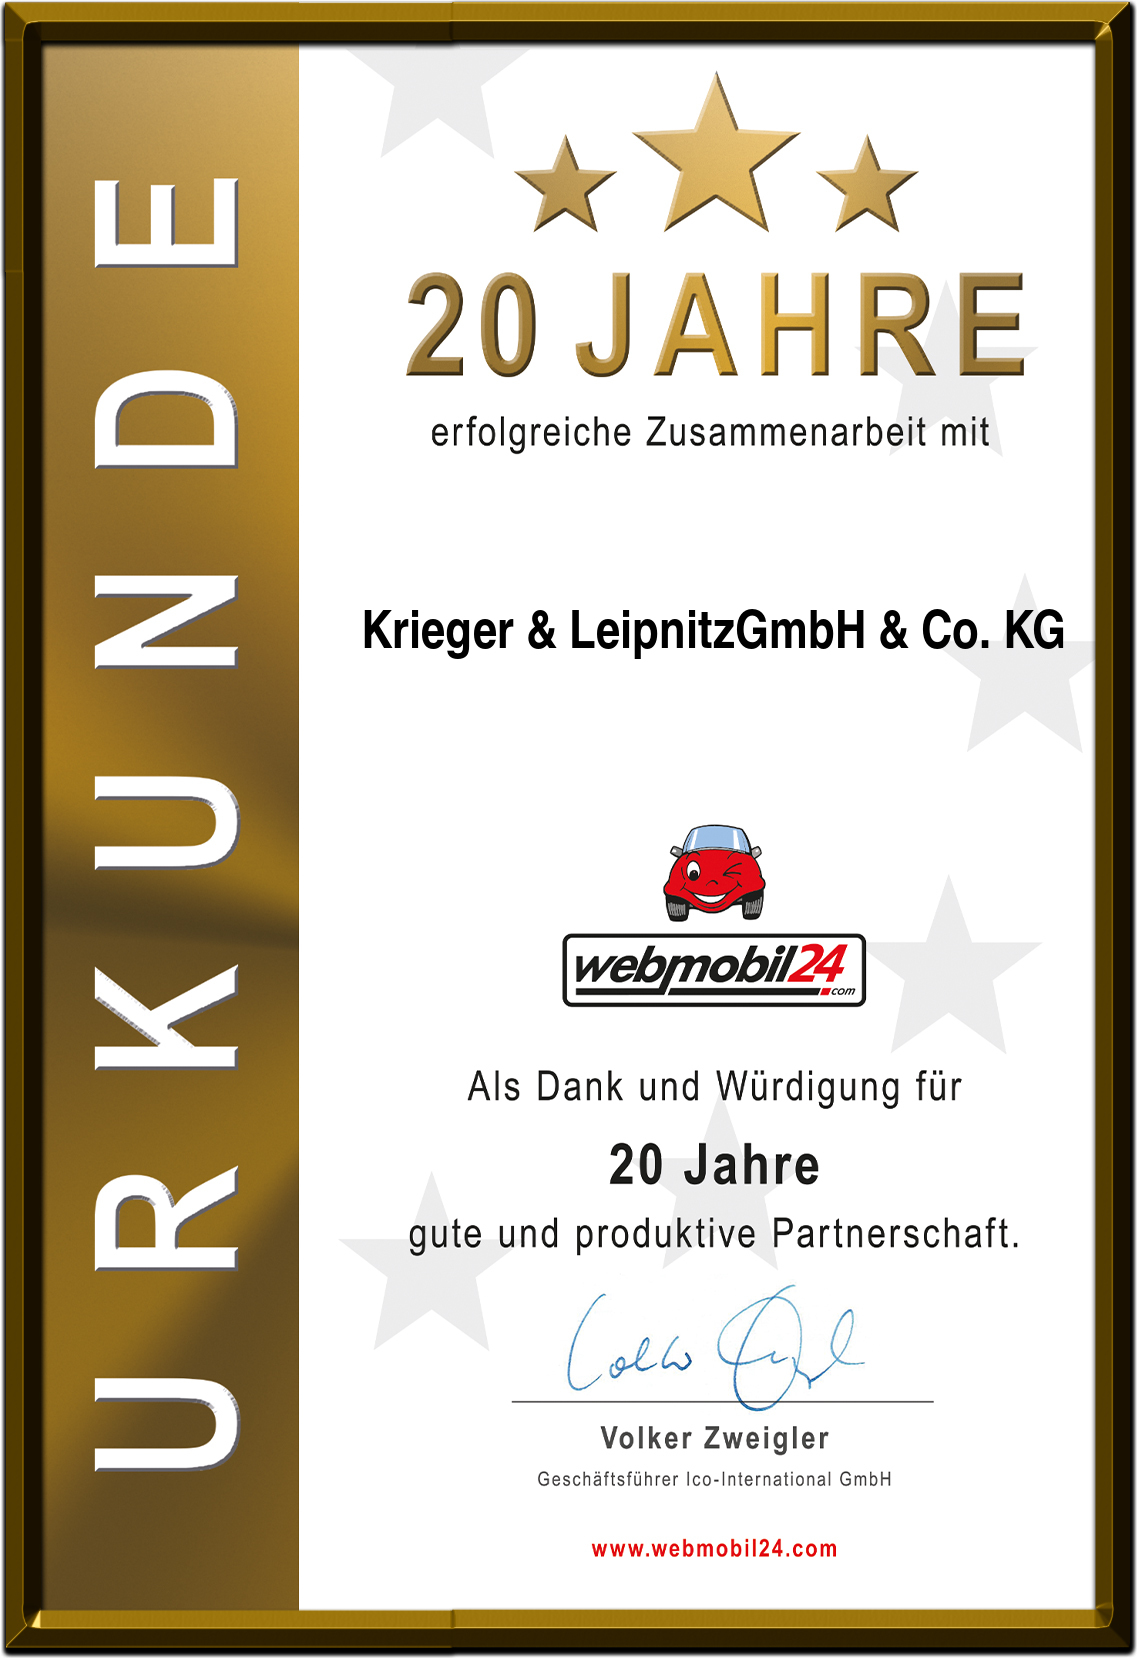 Krieger & LeipnitzGmbH & Co. KG